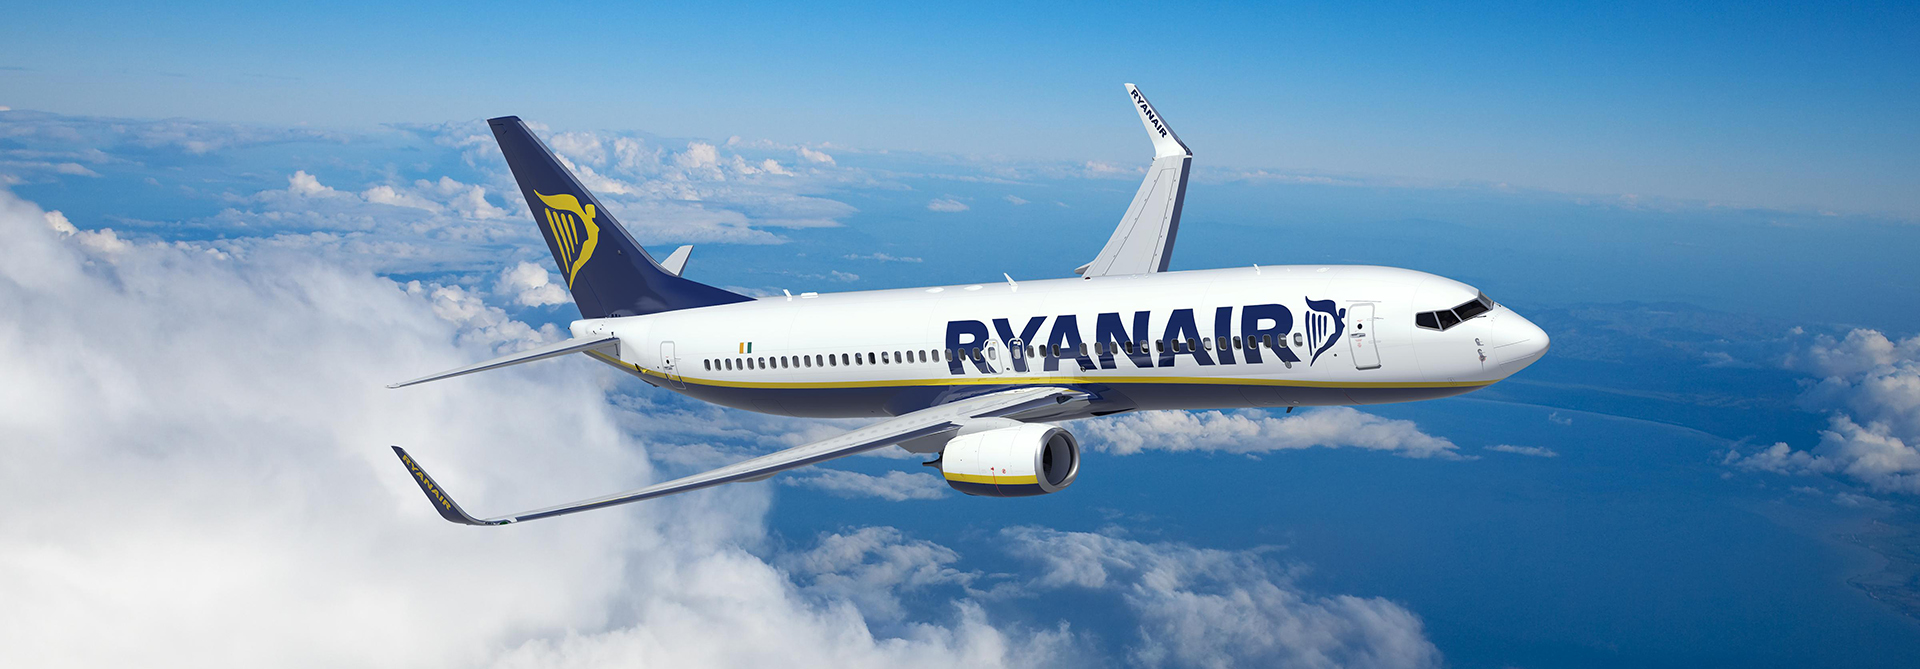 Ryanair 737 in flight